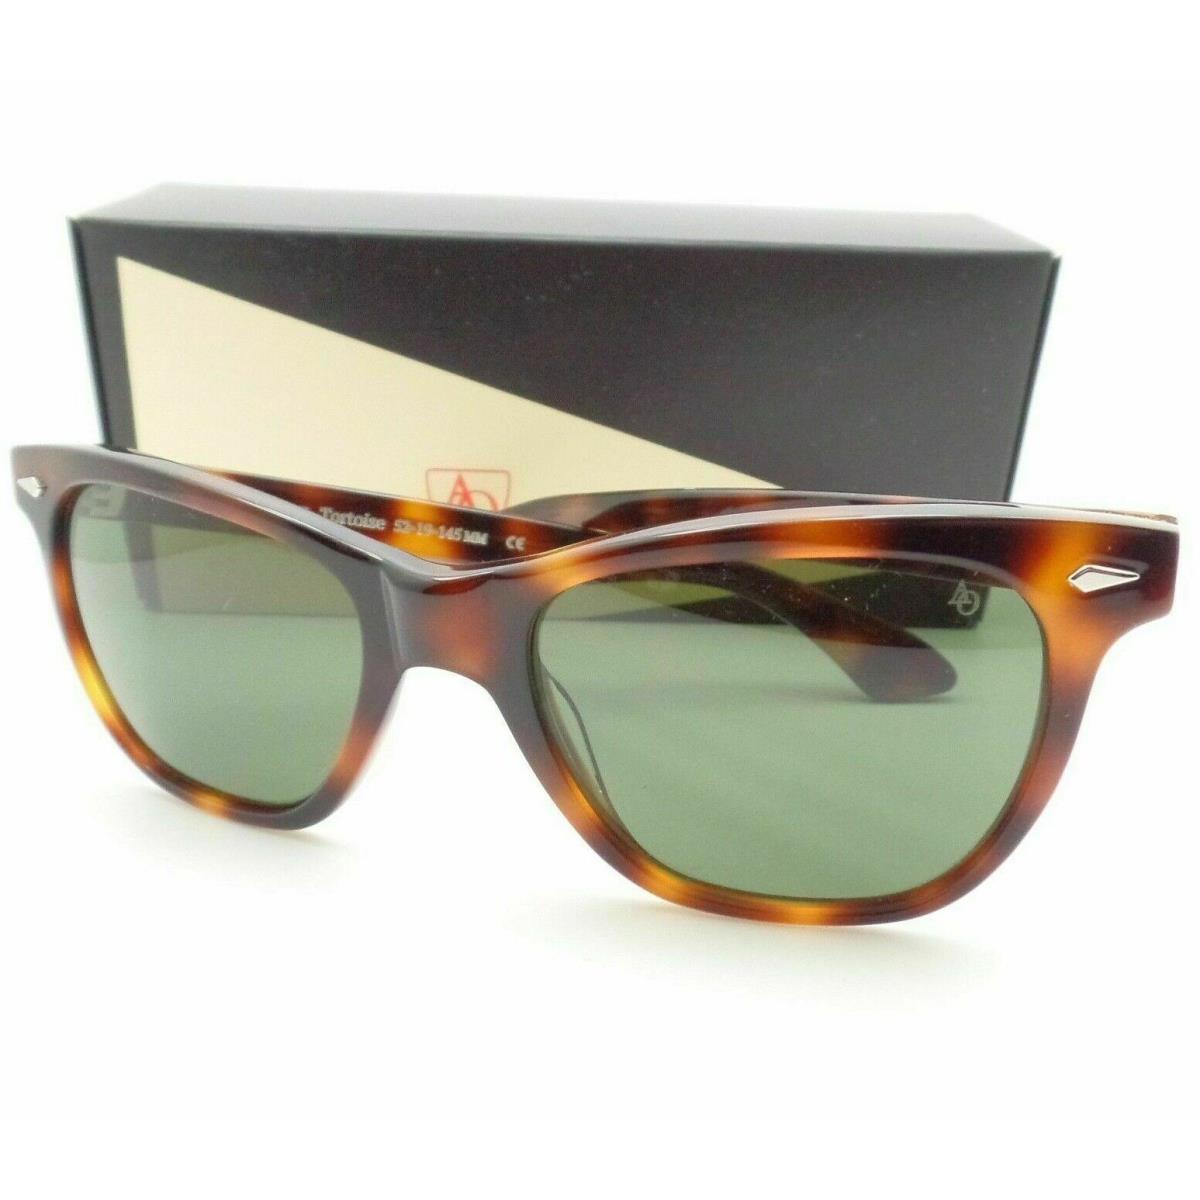 AO American Optical Saratoga Sunglasses Tortoise Green Polar or Frame Only